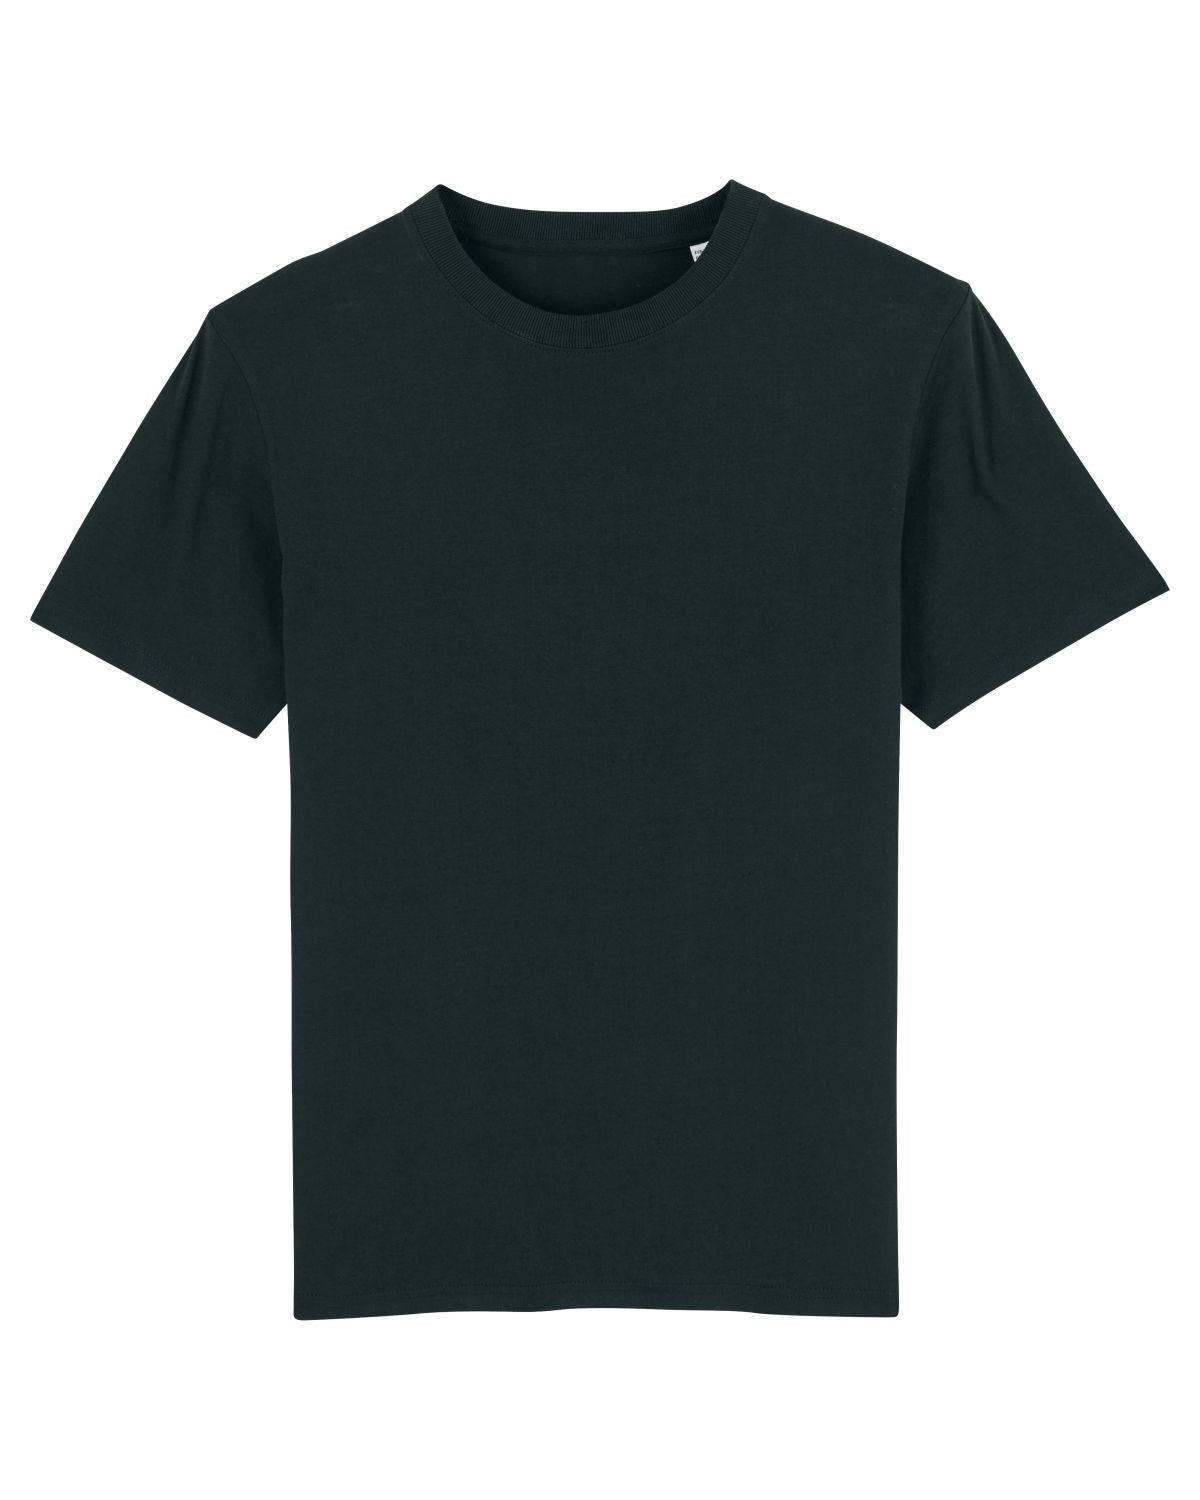 Stanley/Stella's - Sparker T-shirt - Black